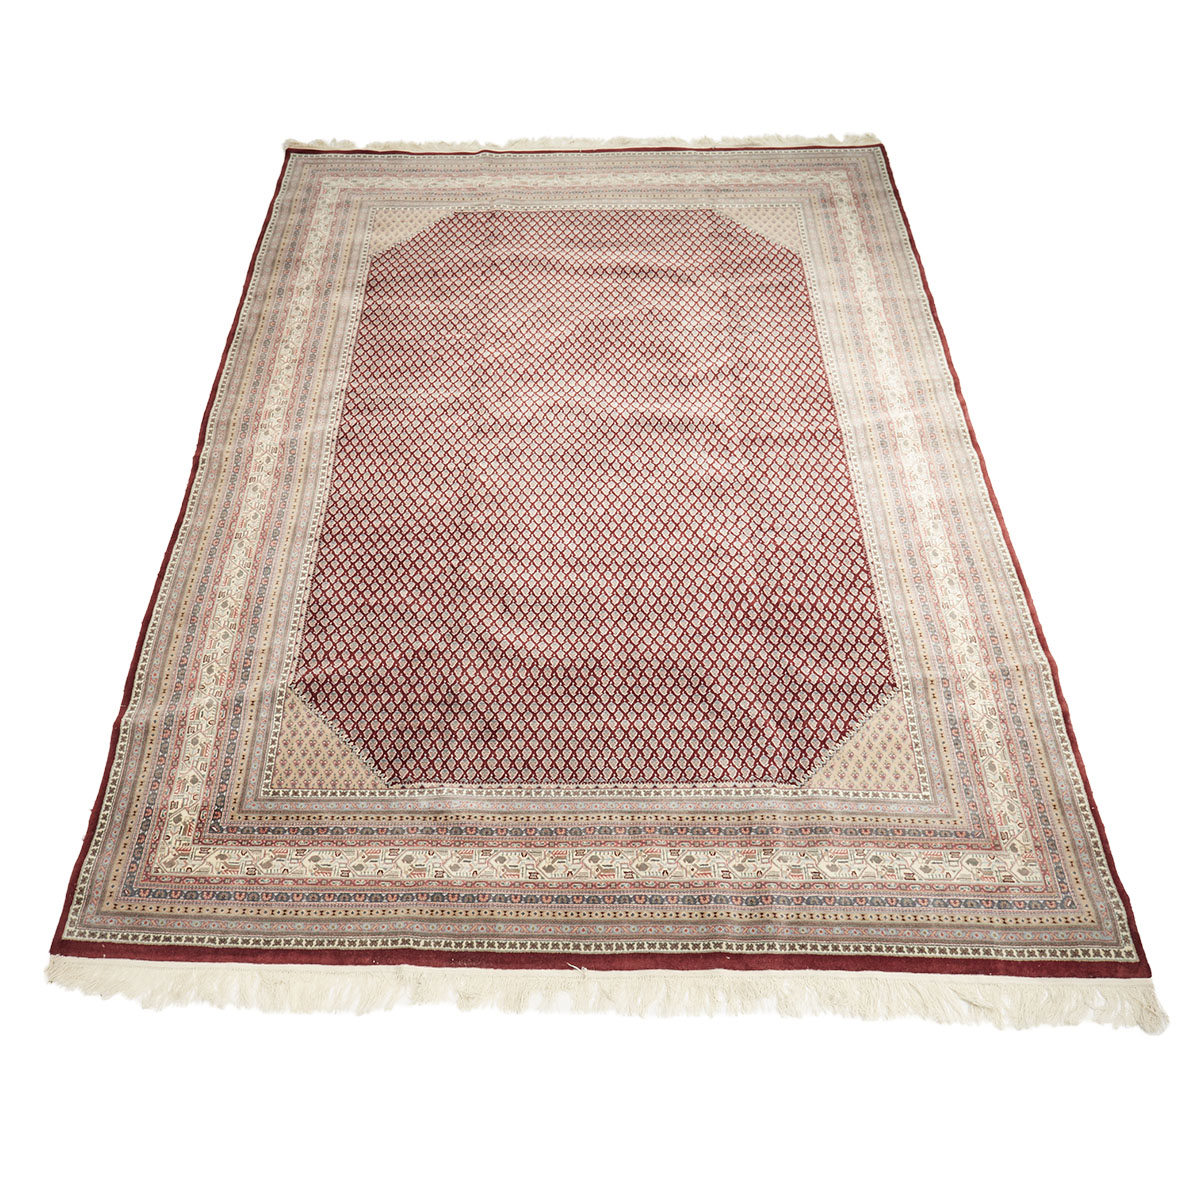 Indo - Saraband Carpet, late 20th century